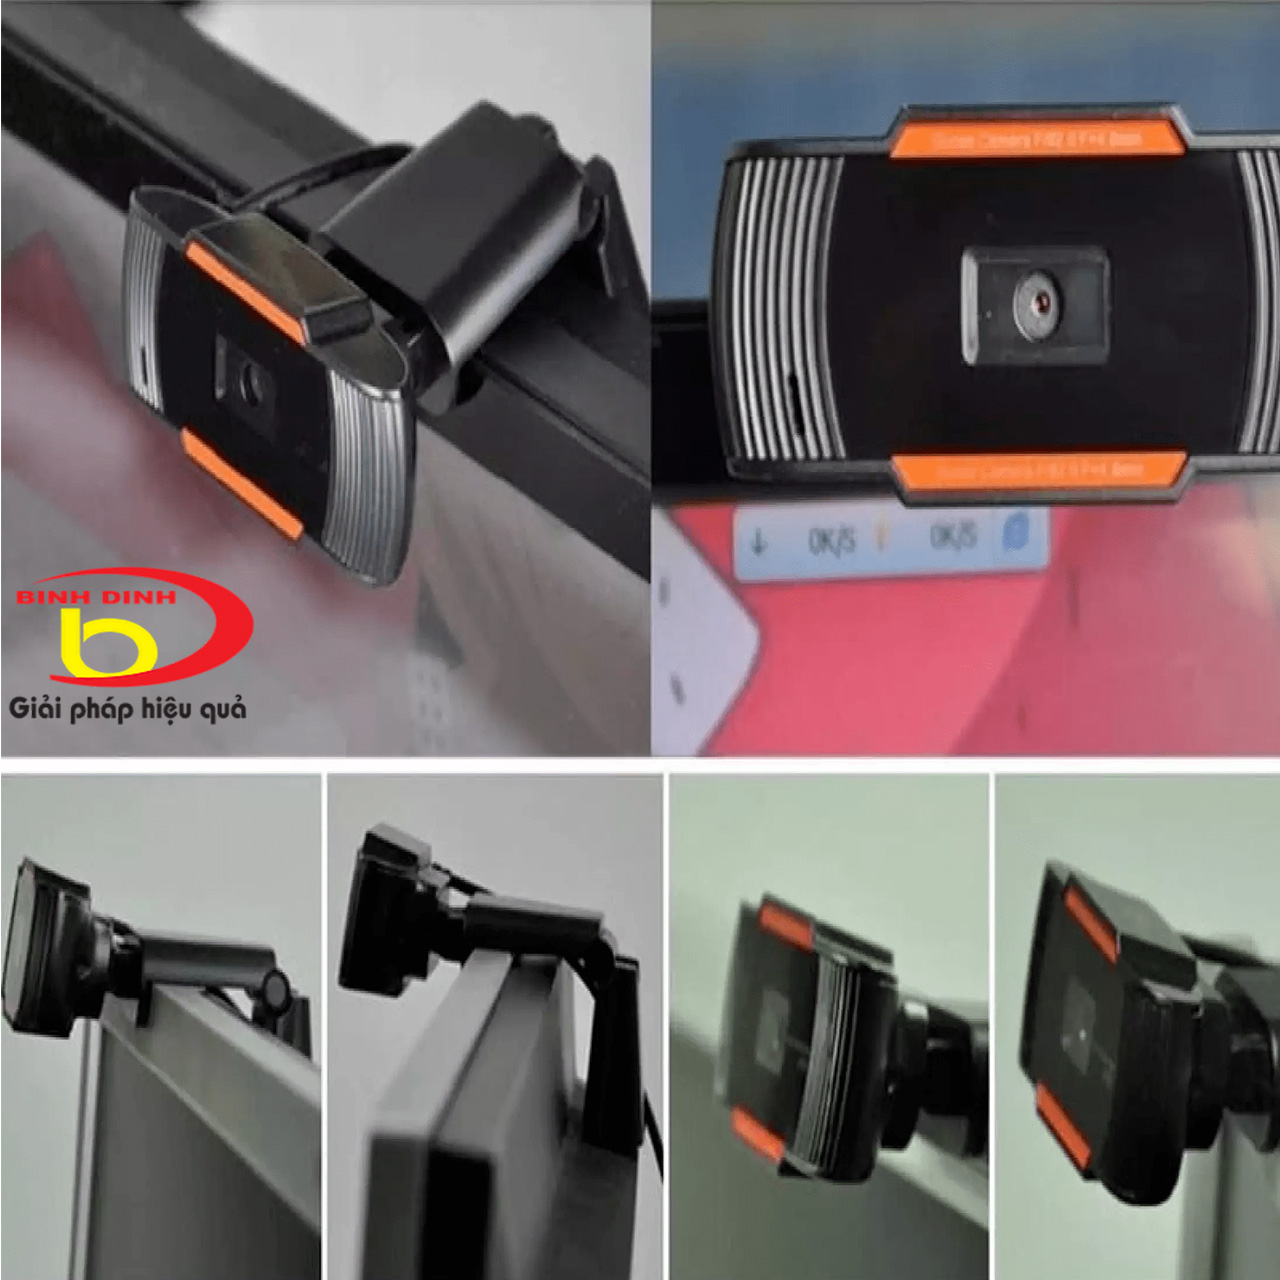 Webcam USB có mic 12.0MP